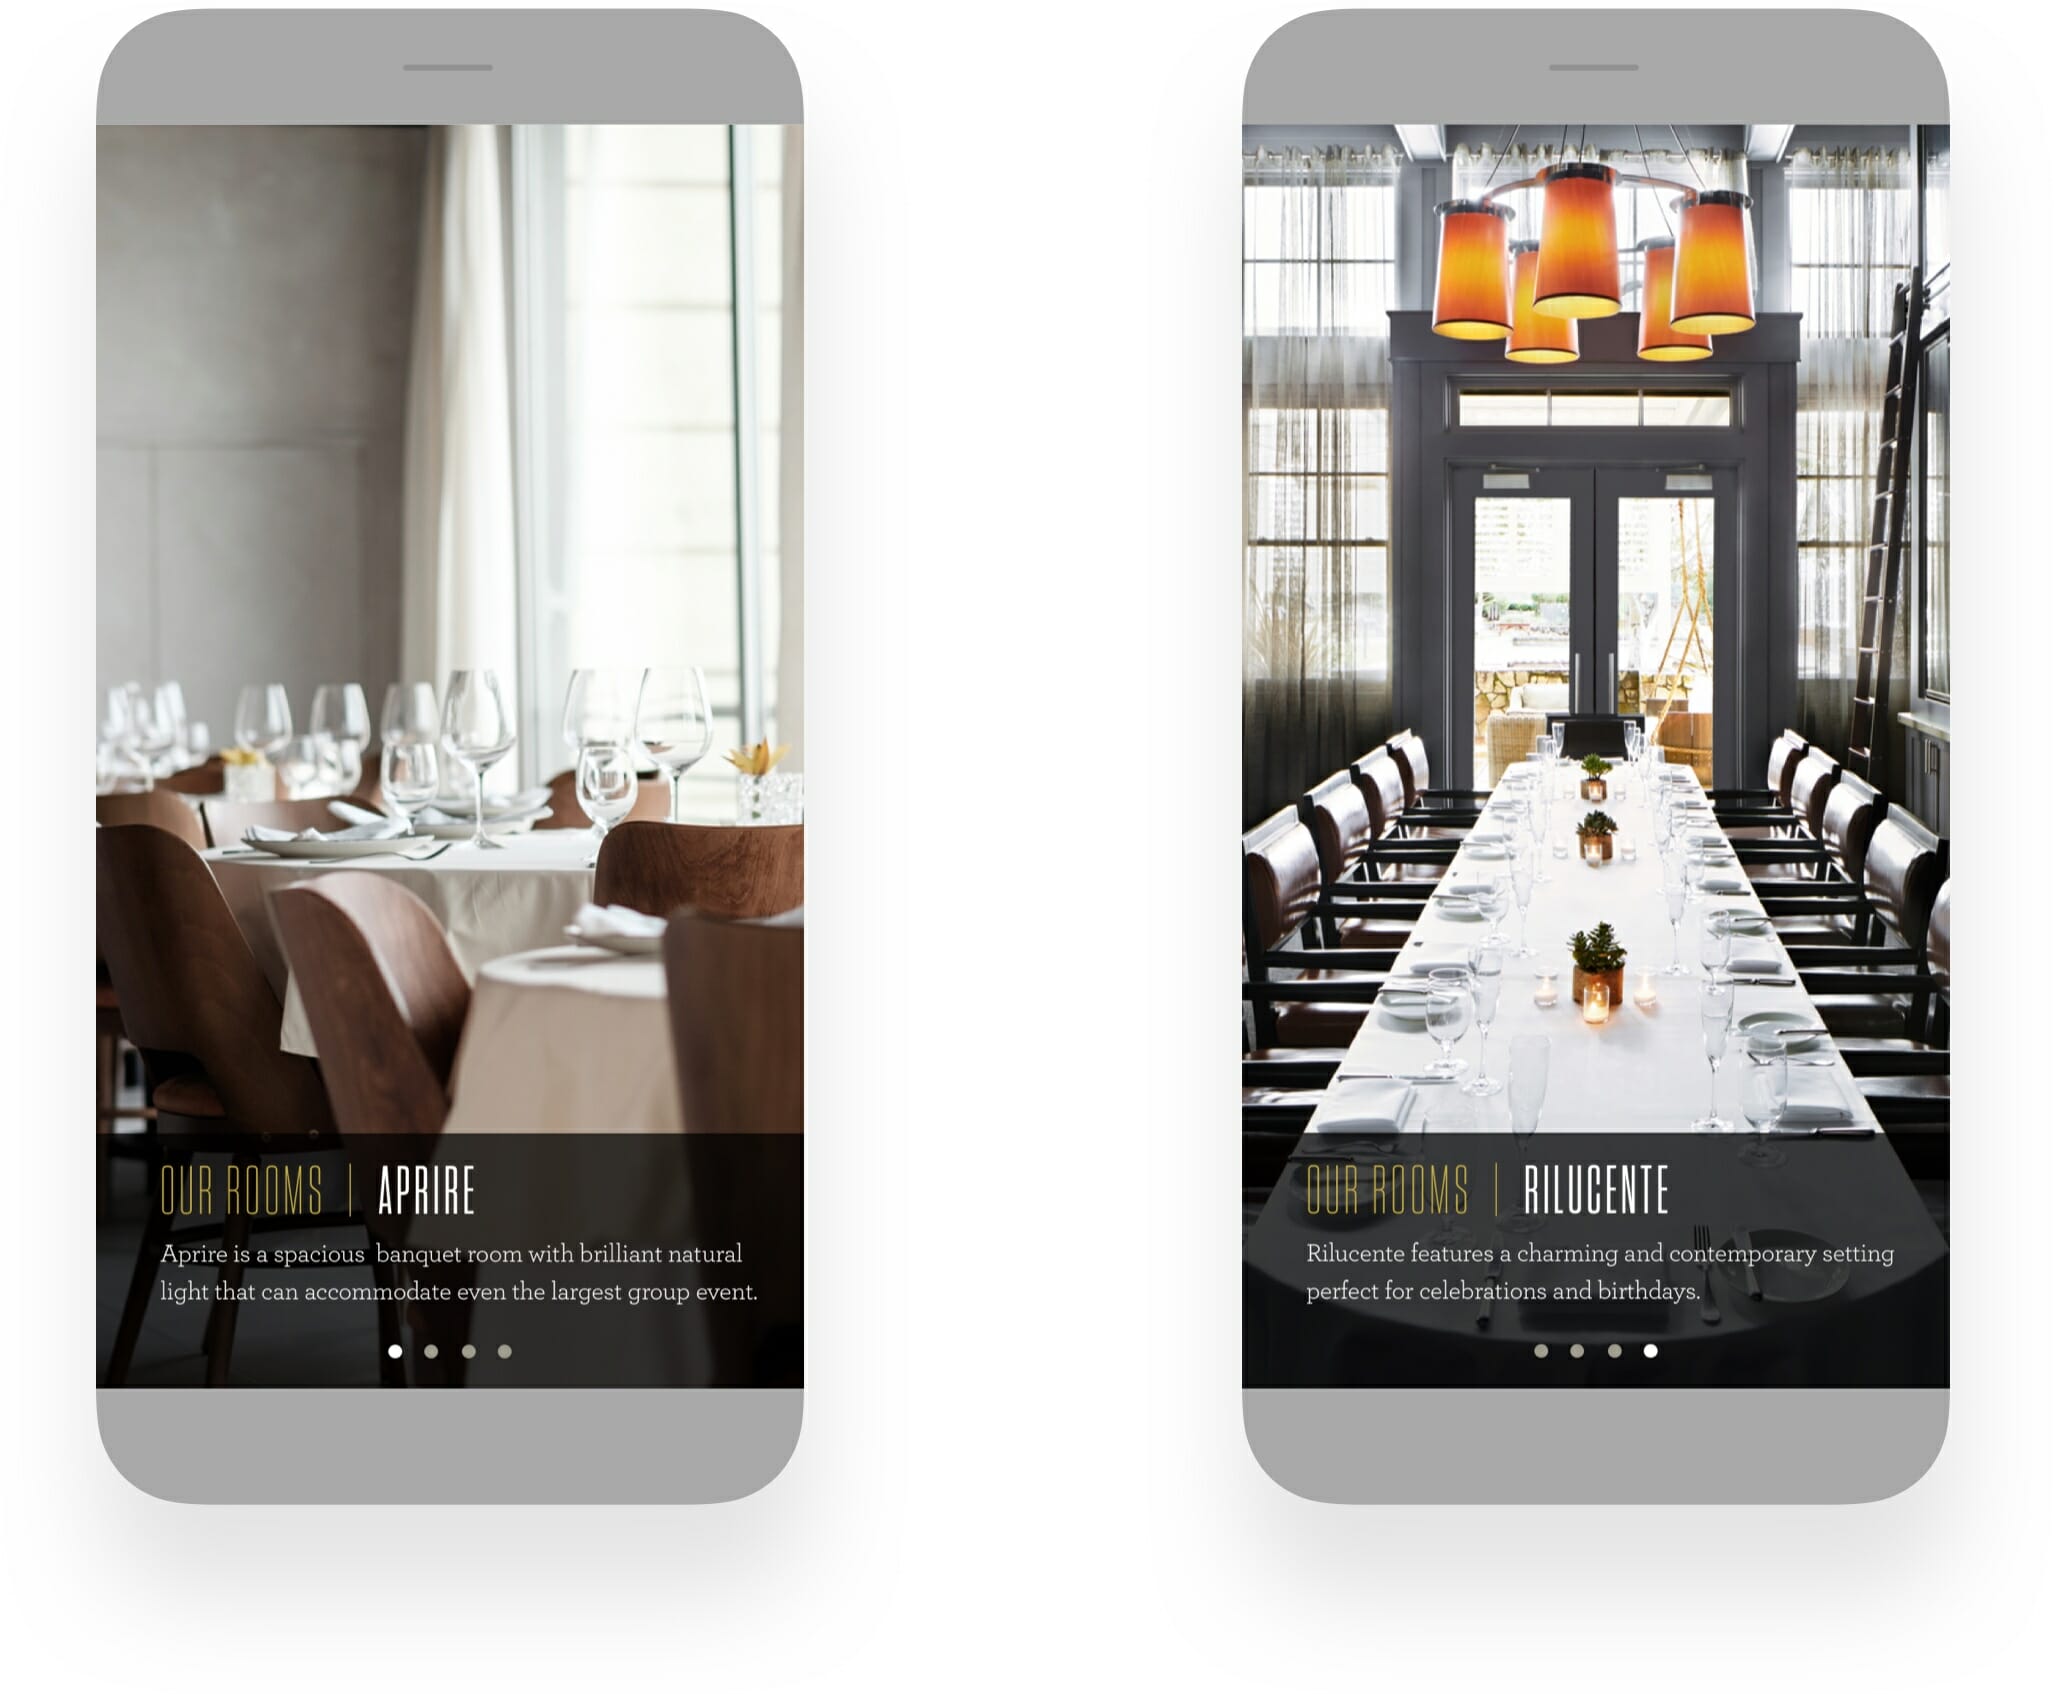 Antiche Restaurant Mobile Responsive Web Design by Mark Lundberg